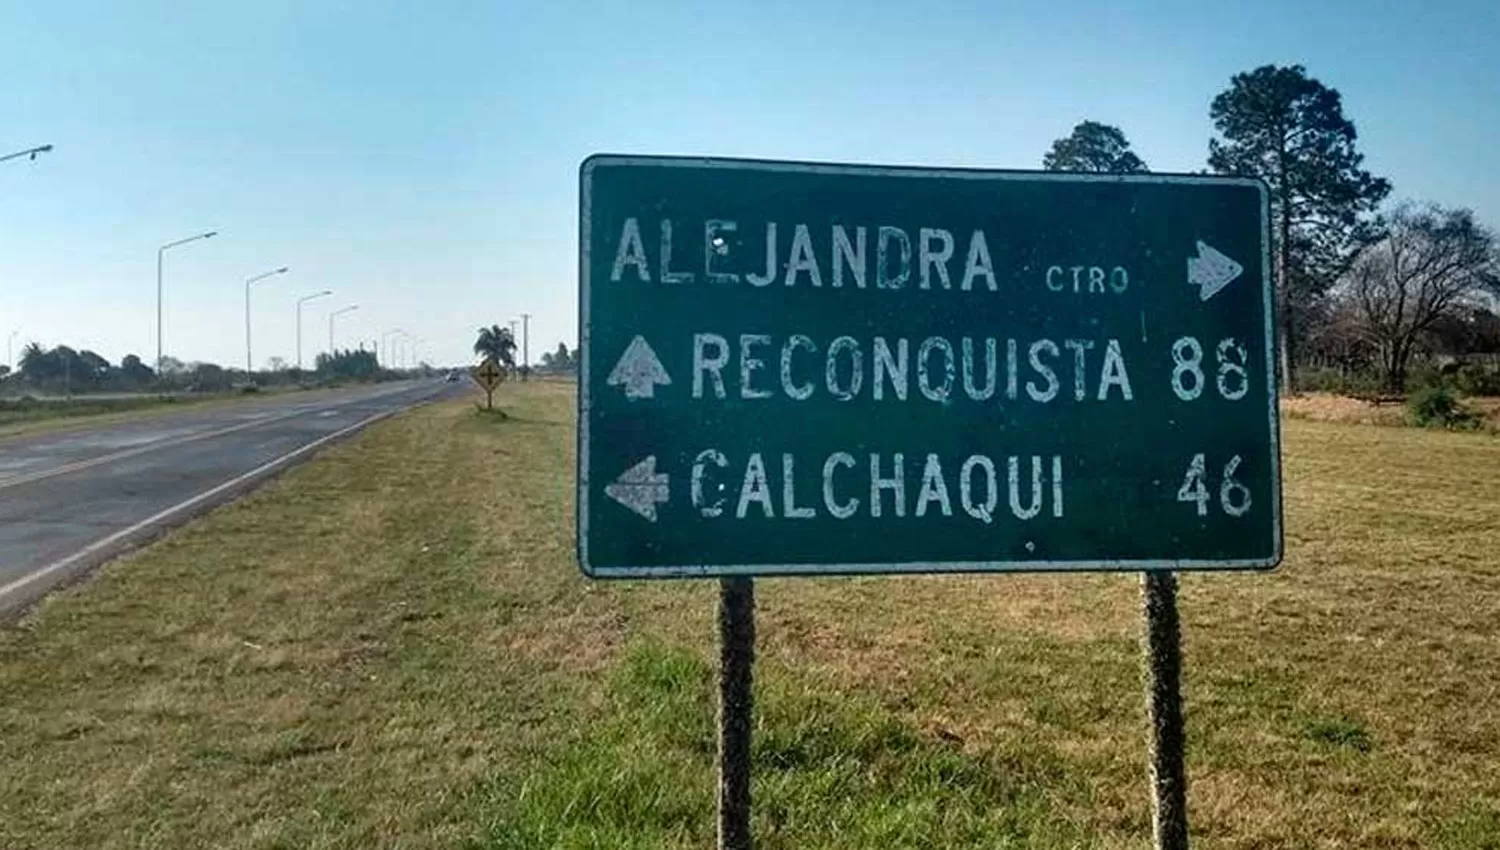 AL NORTE. La localidad de Alejandra queda a 237 kilómetros de la capital santafesina.